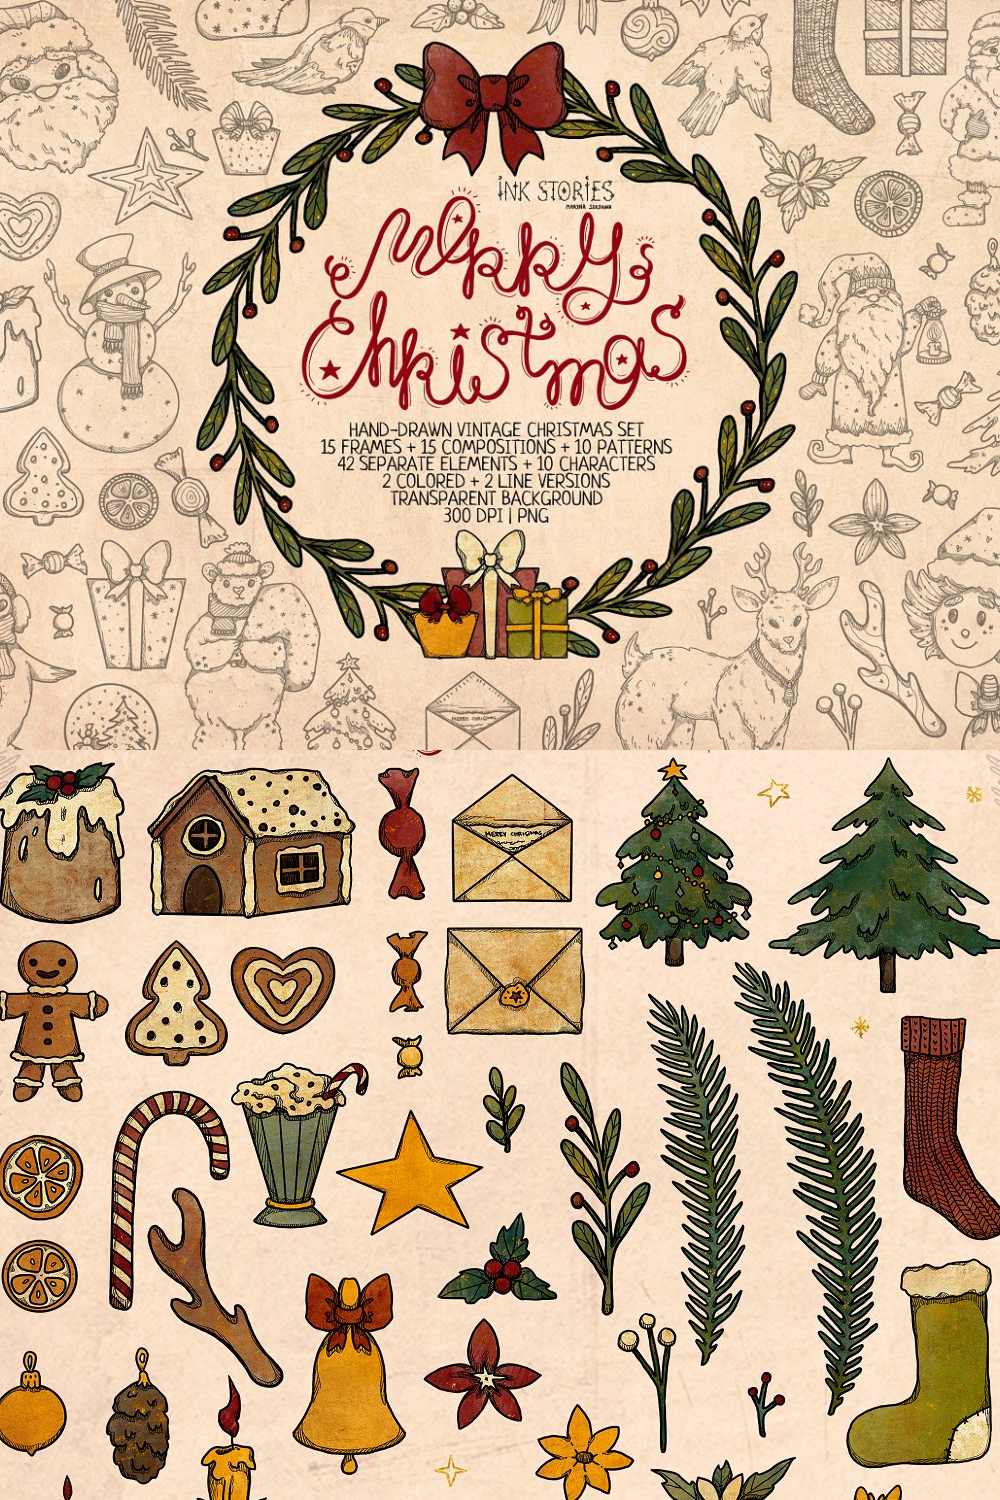 Merry Christmas - Pinterest.